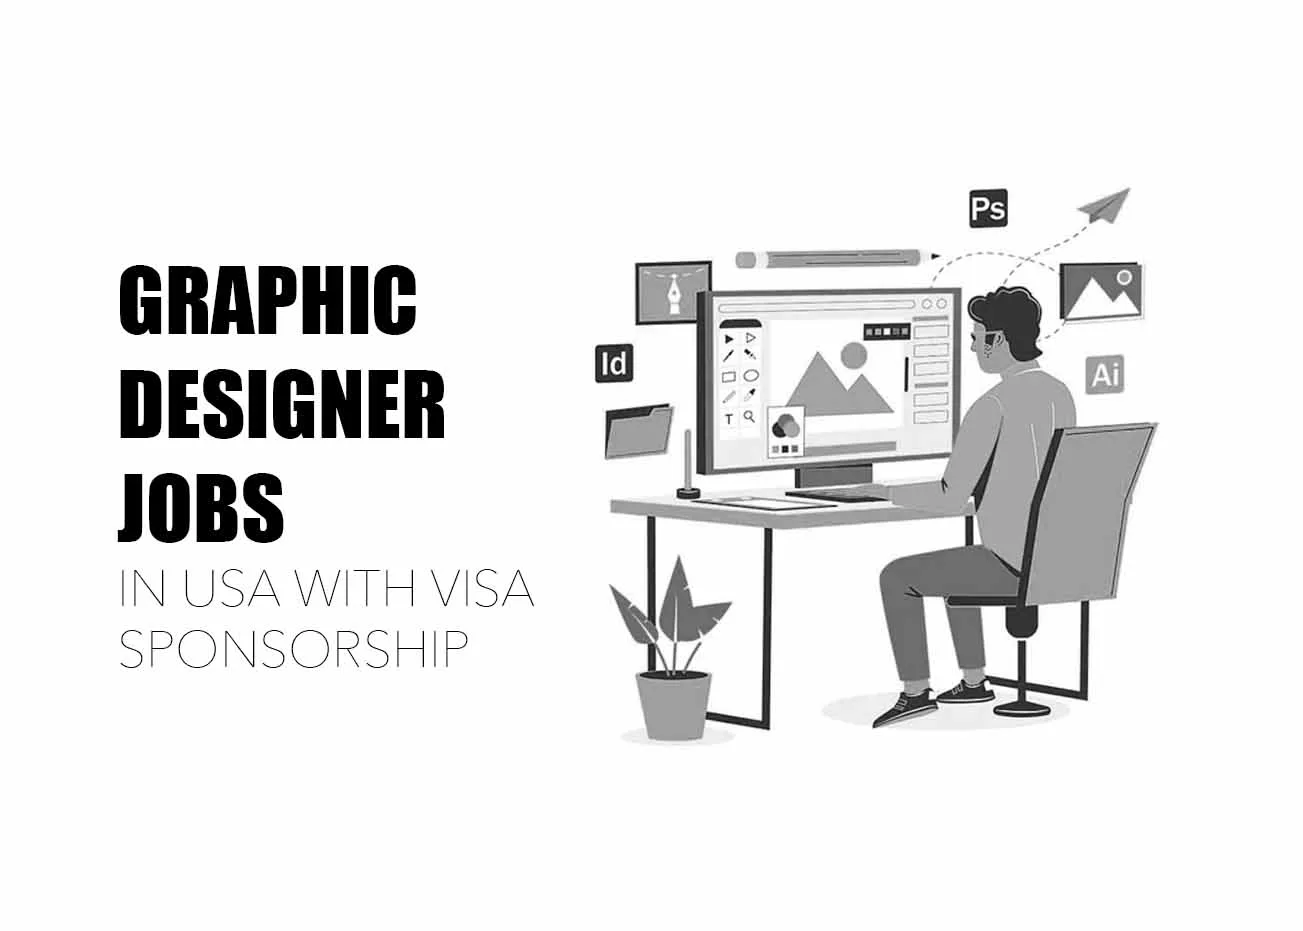 Graphic Designer Jobs in USA with Visa Sponsorship